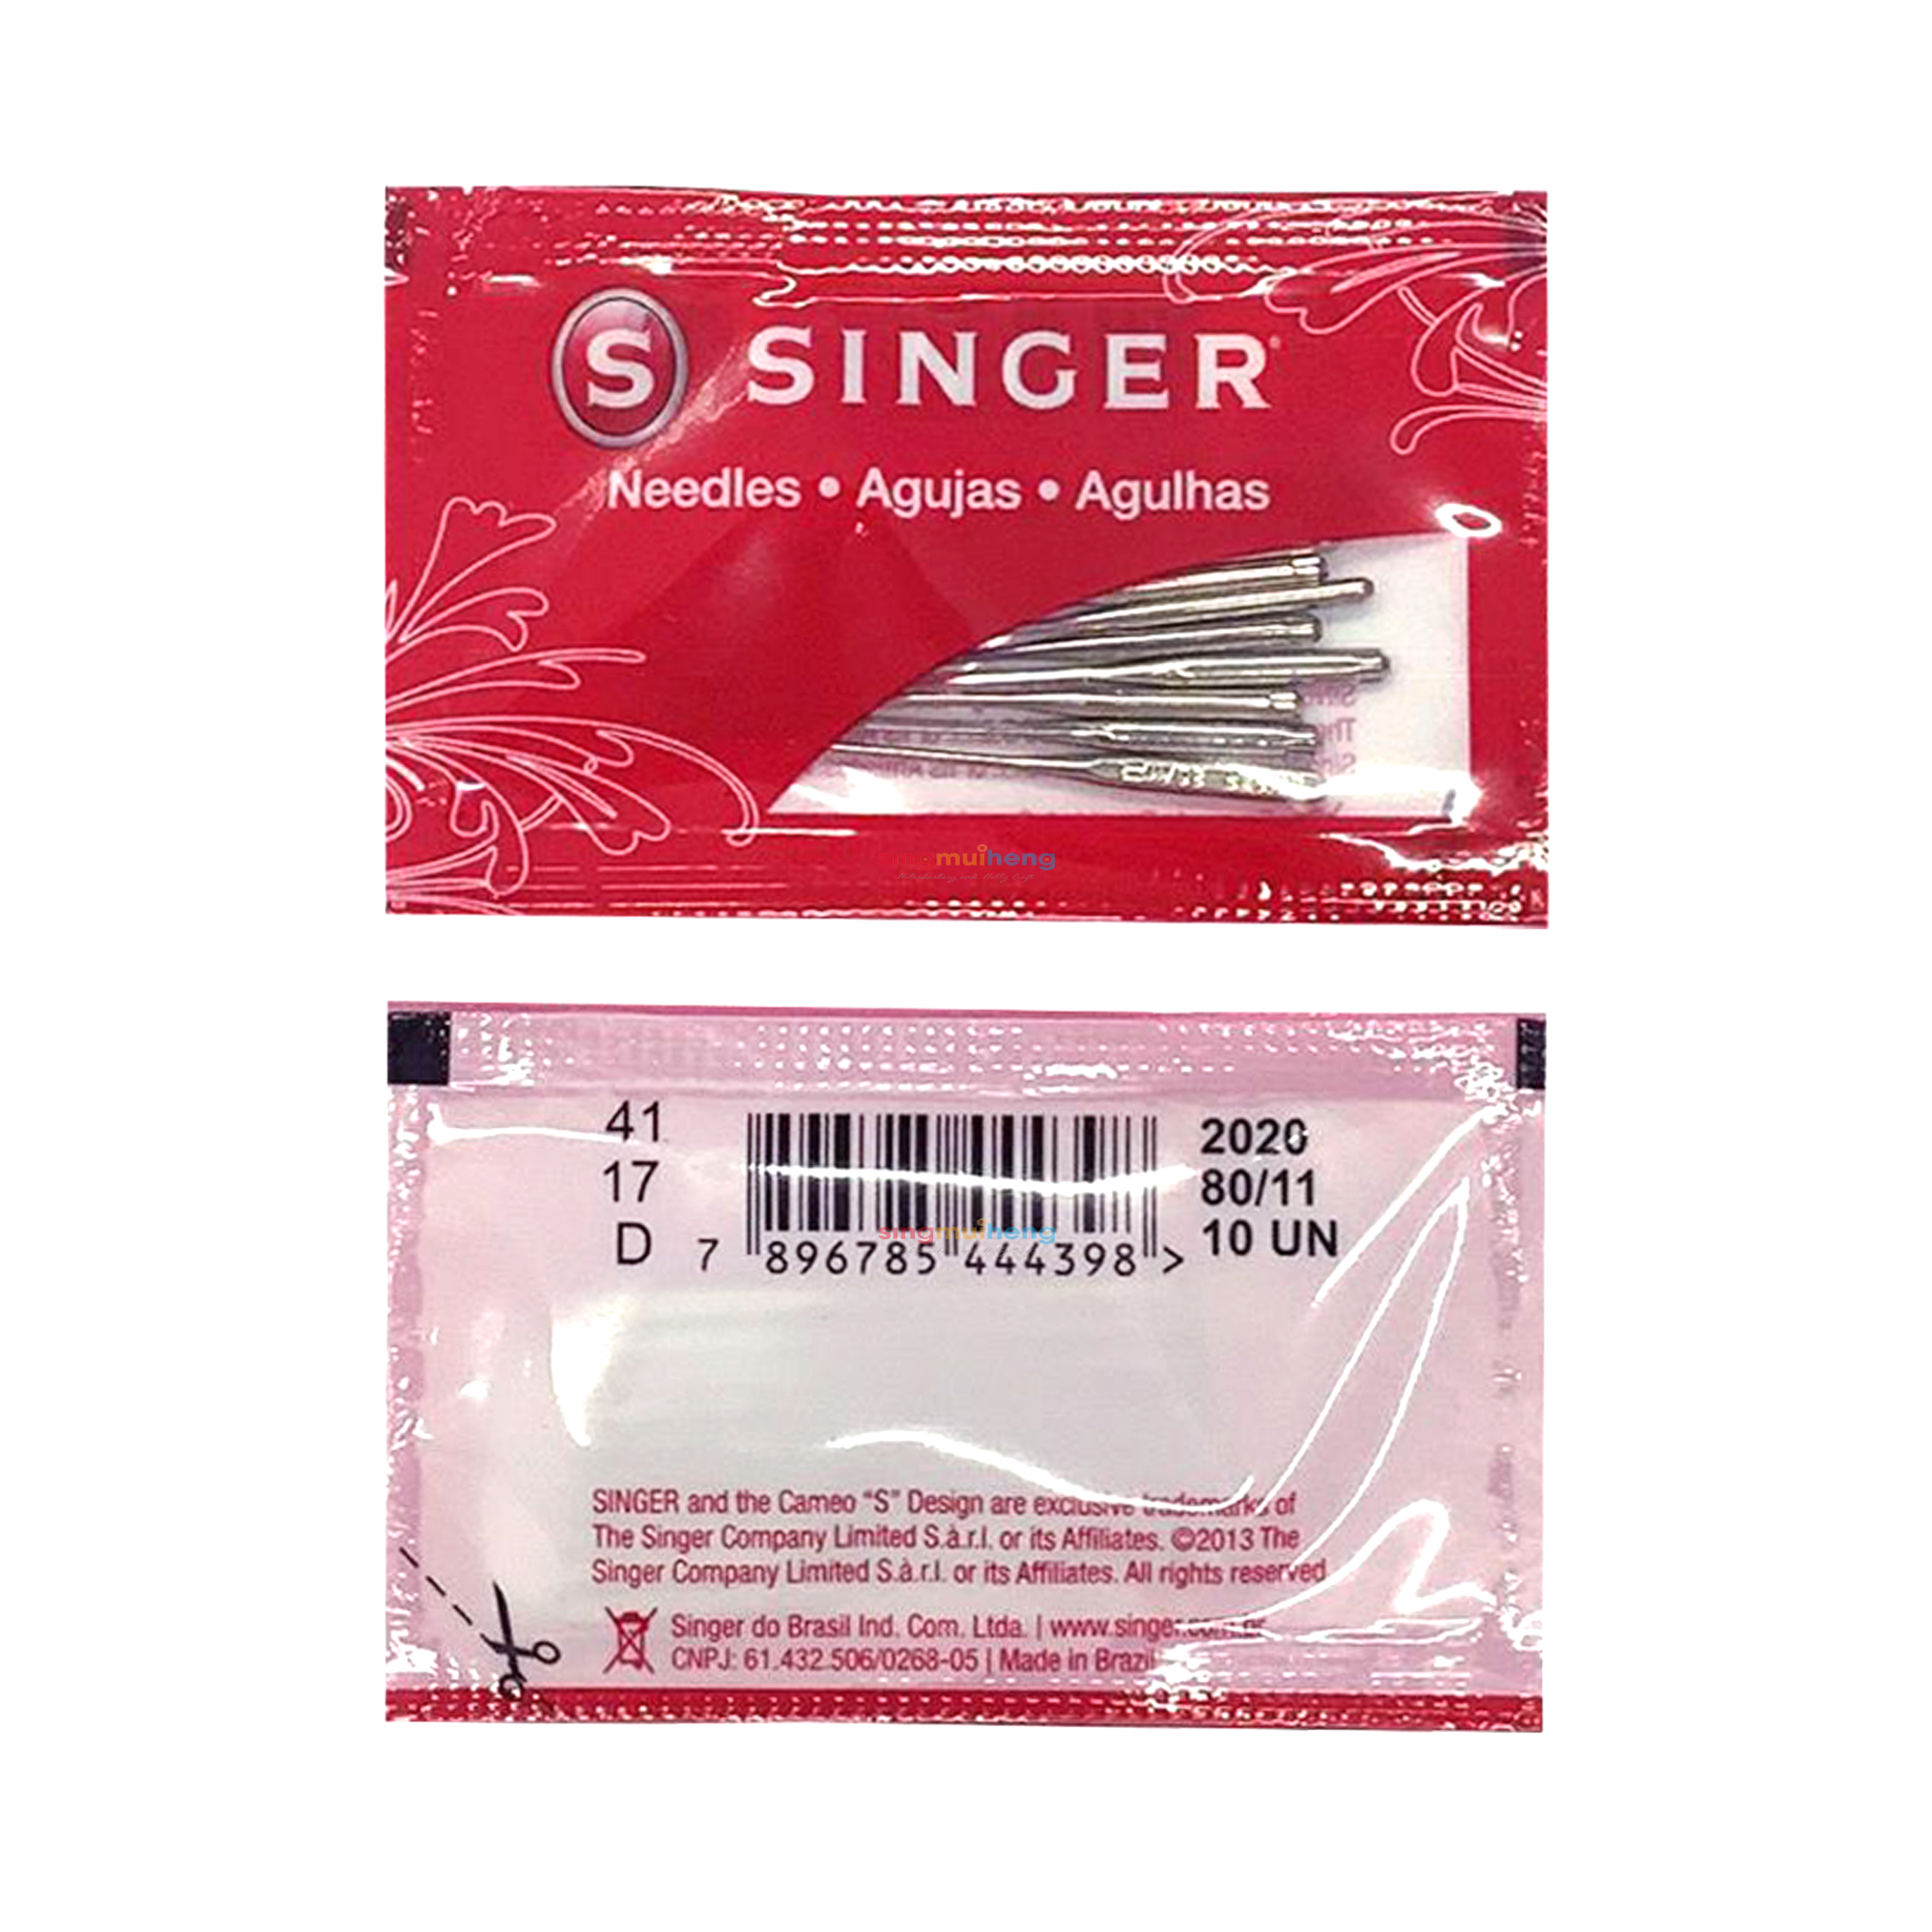 Singer – Sewing Machine Needles 2020 (Assorted Sizes) (10 Pcs